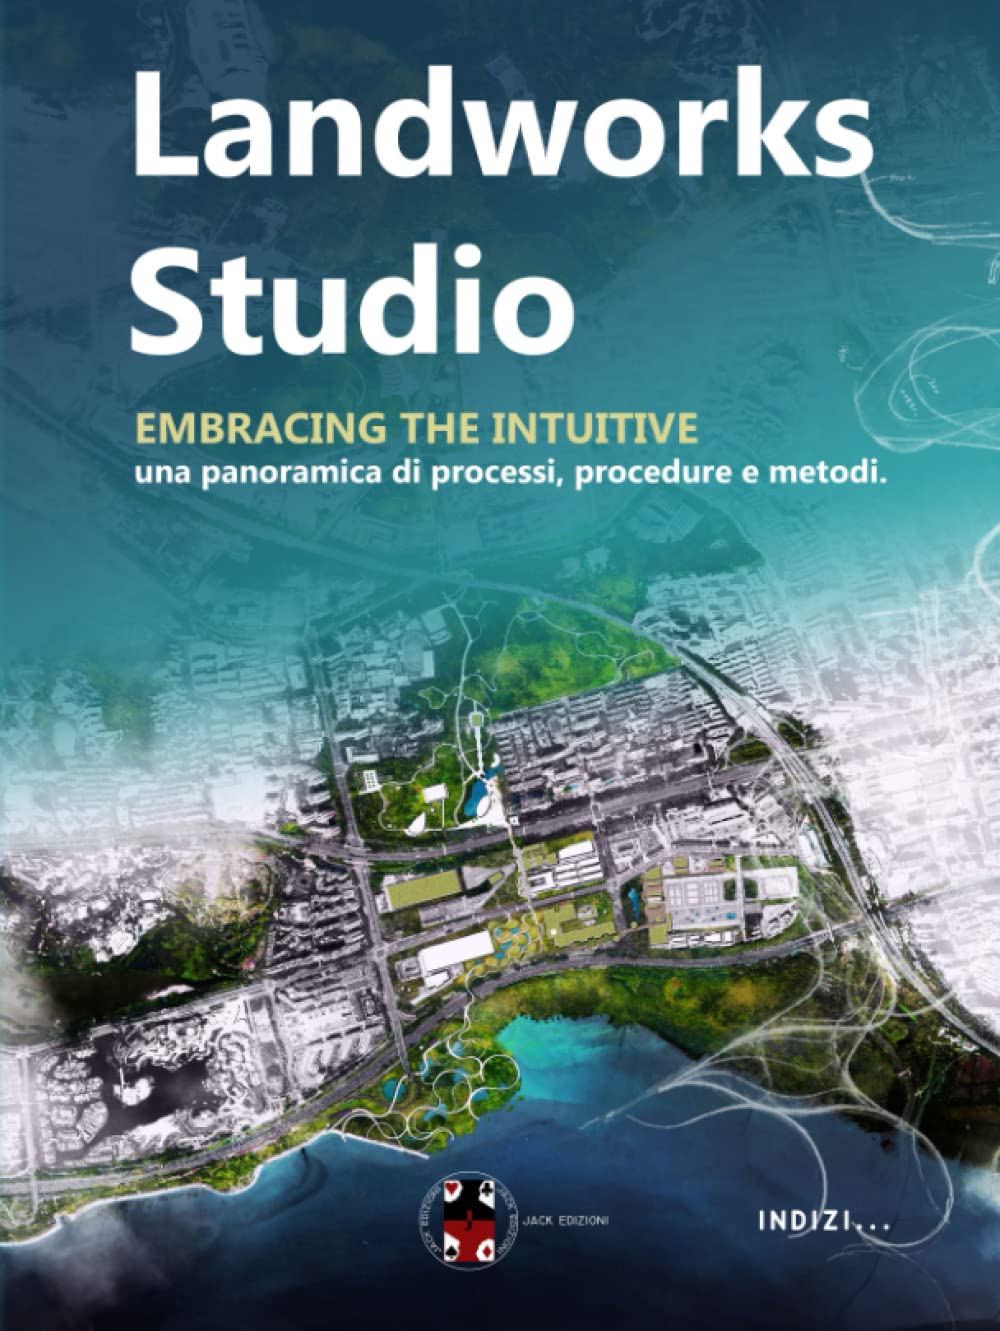 Landworks Studio Embracing the Intuitive: Una panoramica di processi, procedure e metodi (Indizi/Clues) (Italian Edition)